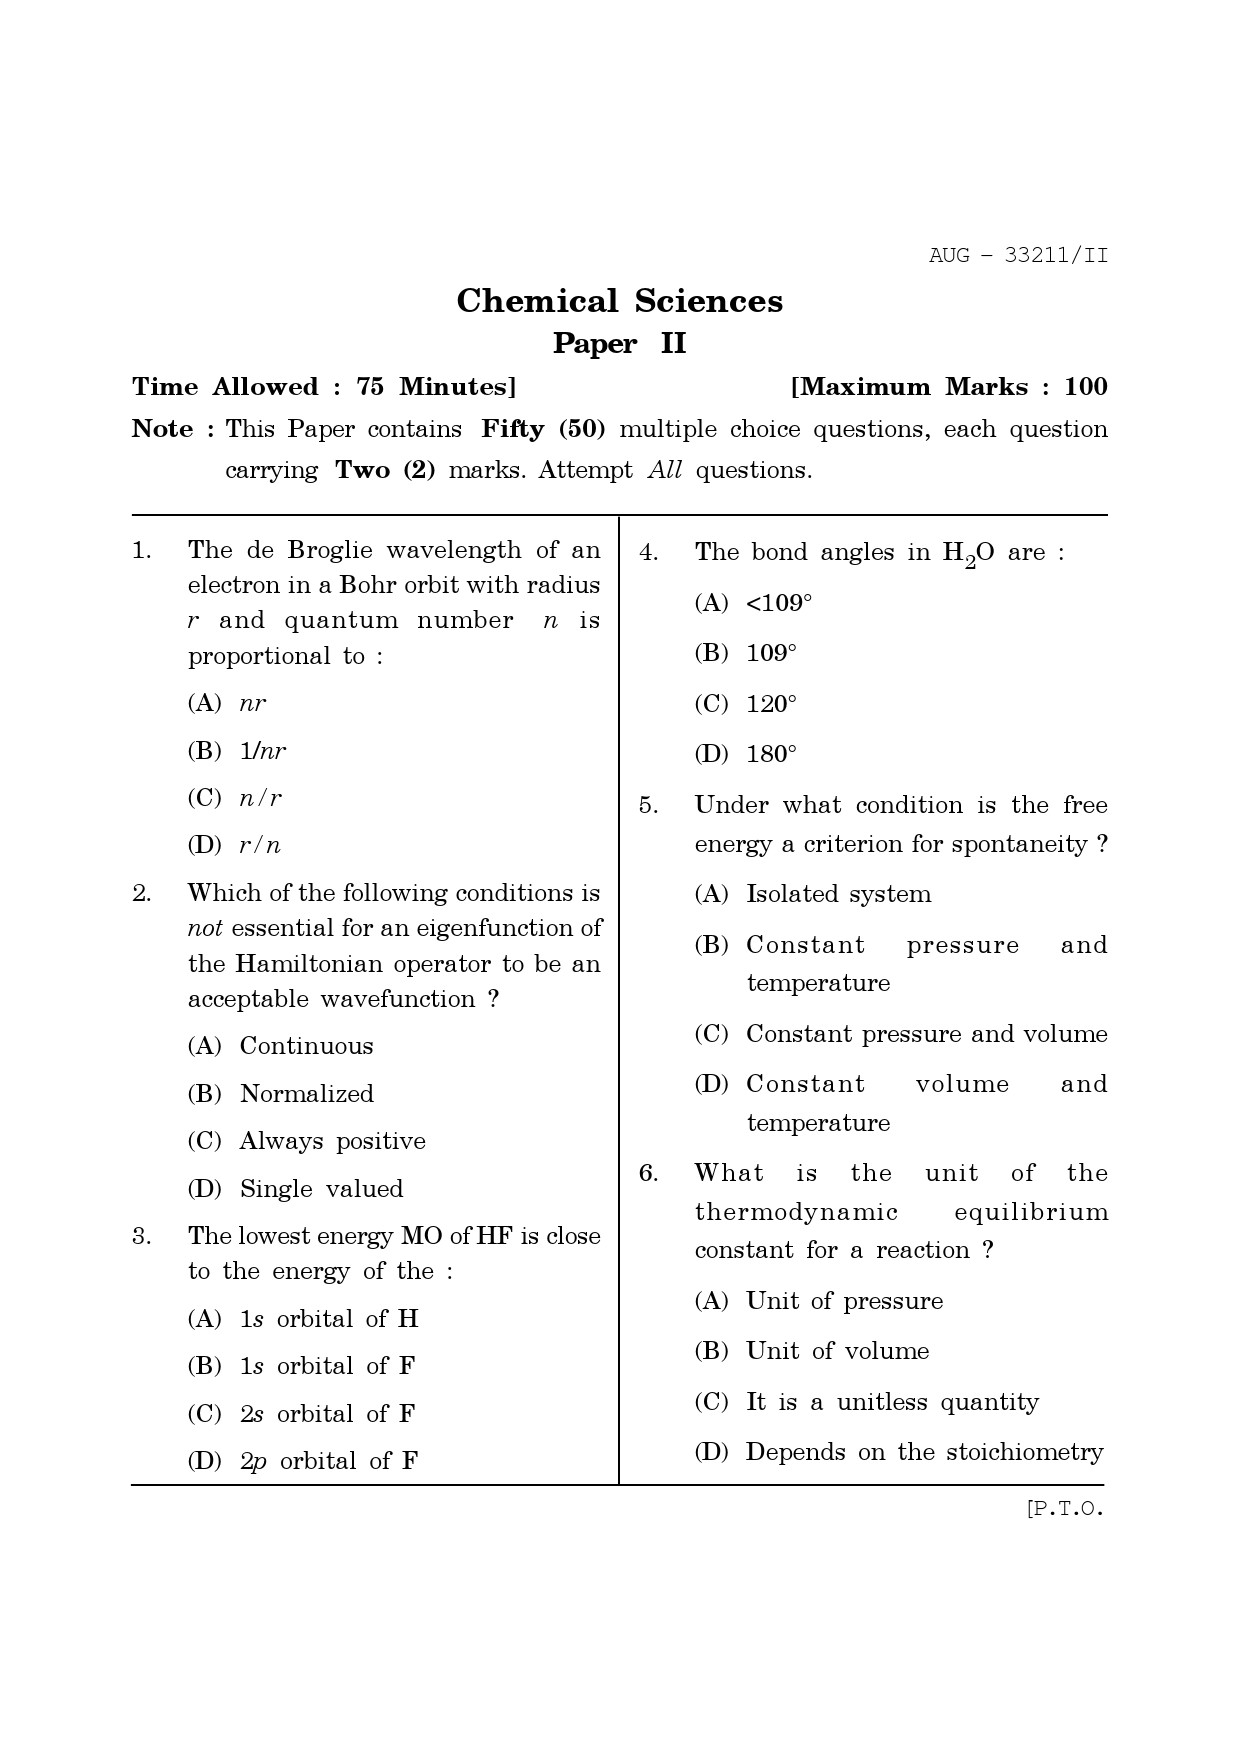 Maharashtra SET Chemical Sciences Question Paper II August 2011 1